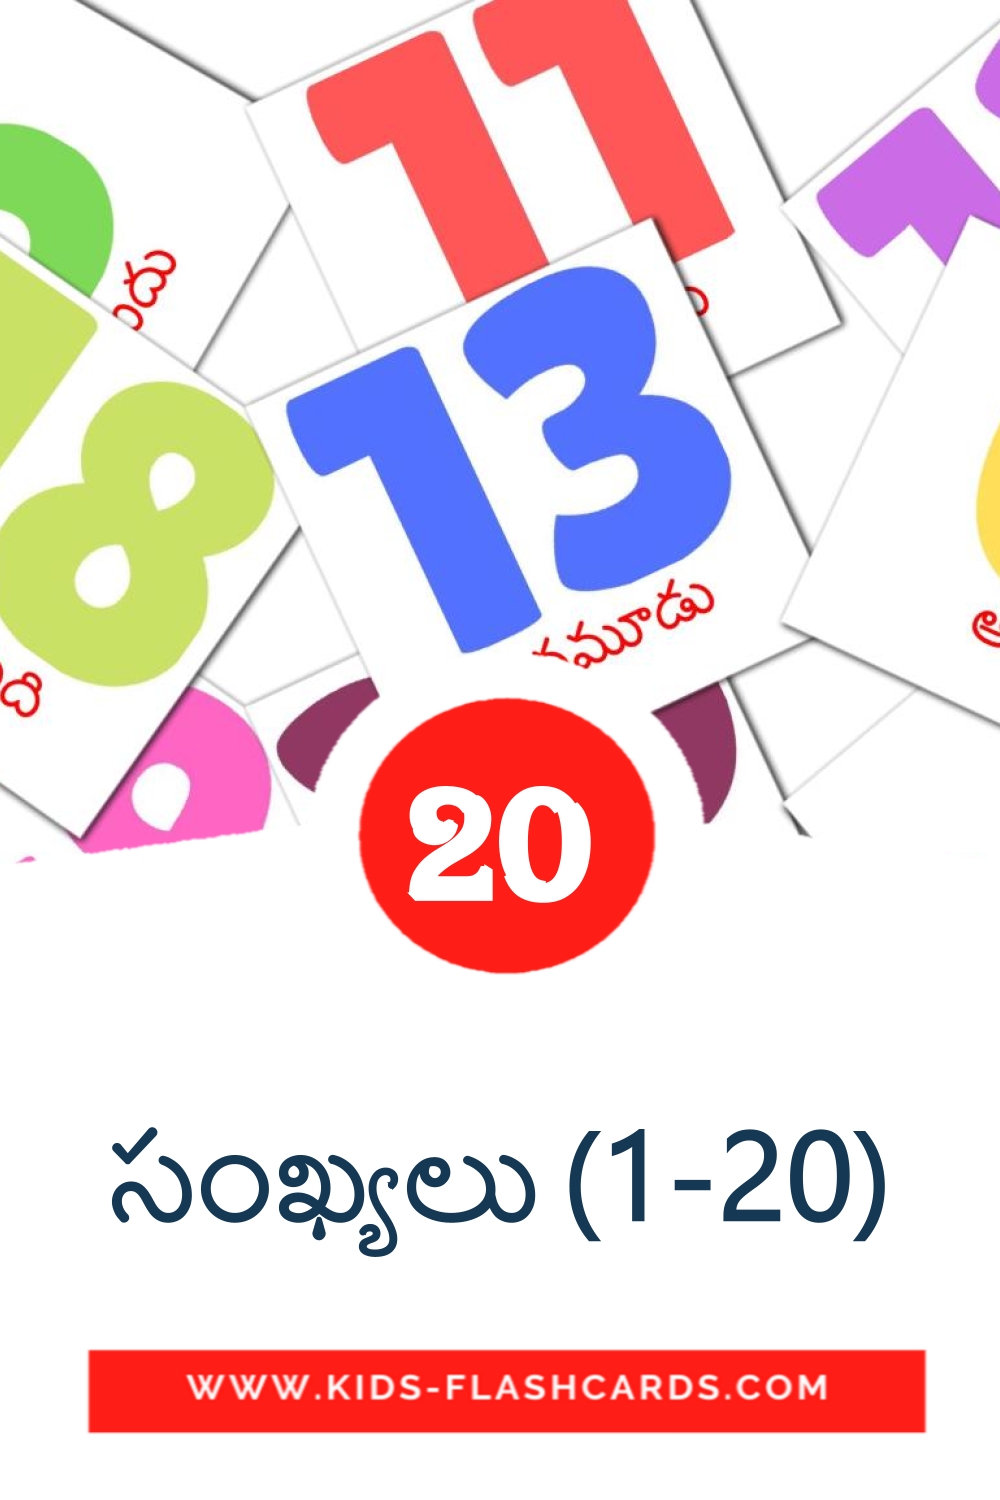 20 carte illustrate di సంఖ్యలు (1-20) per la scuola materna in telugu